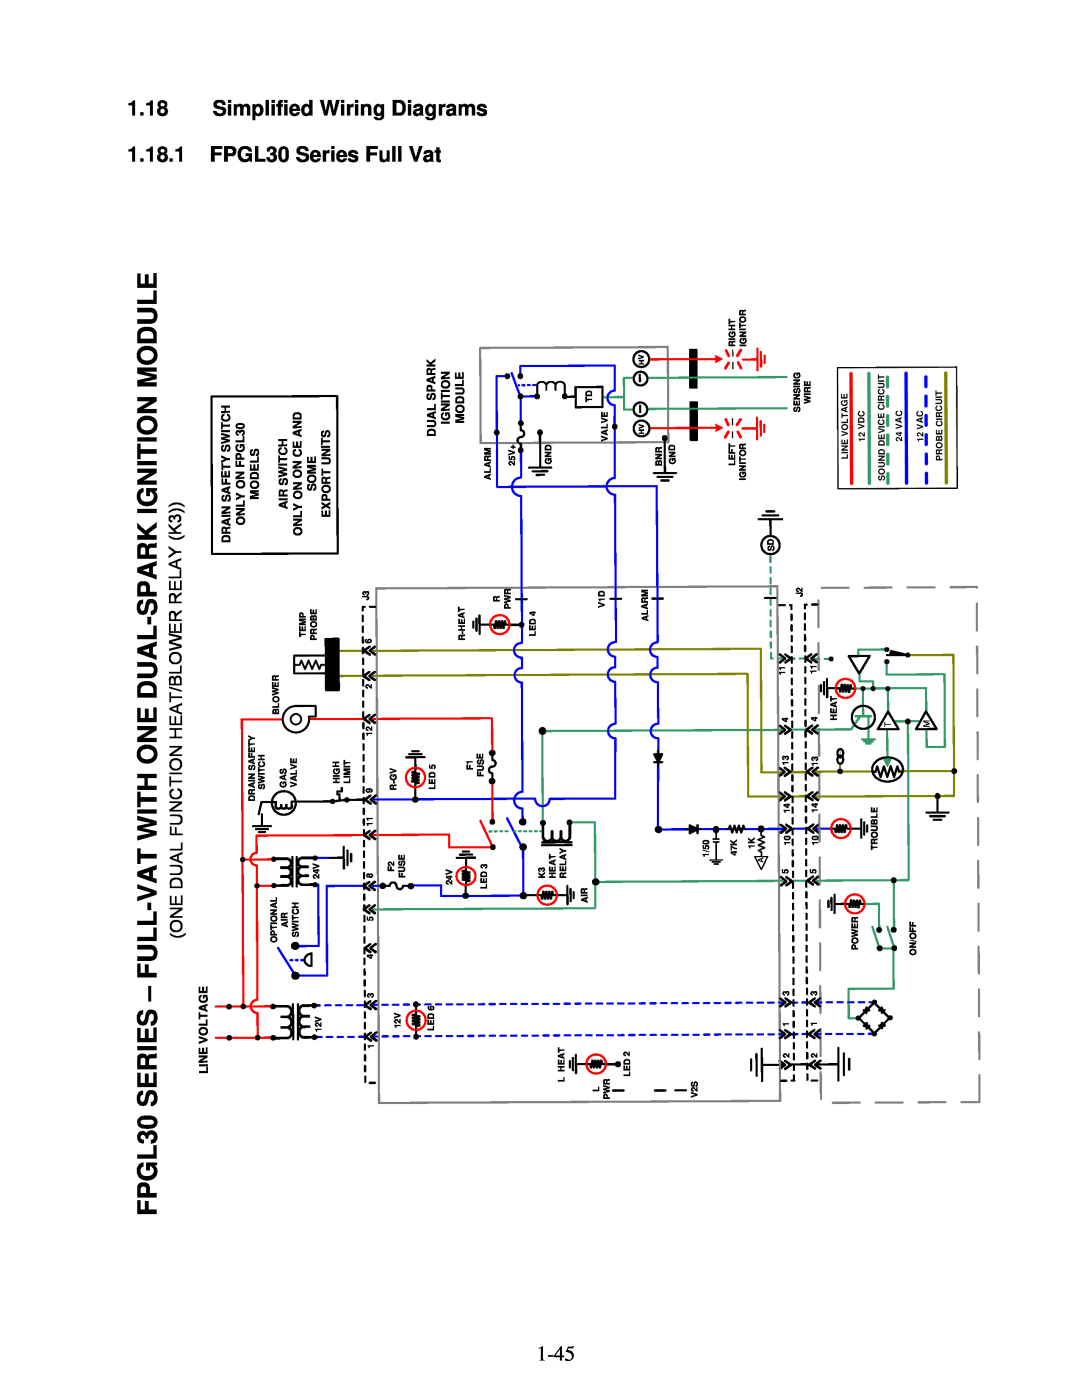 Frymaster 8196345 manual 1.18Simplified Wiring Diagrams, 1.18.1FPGL30 Series Full Vat, Atol 